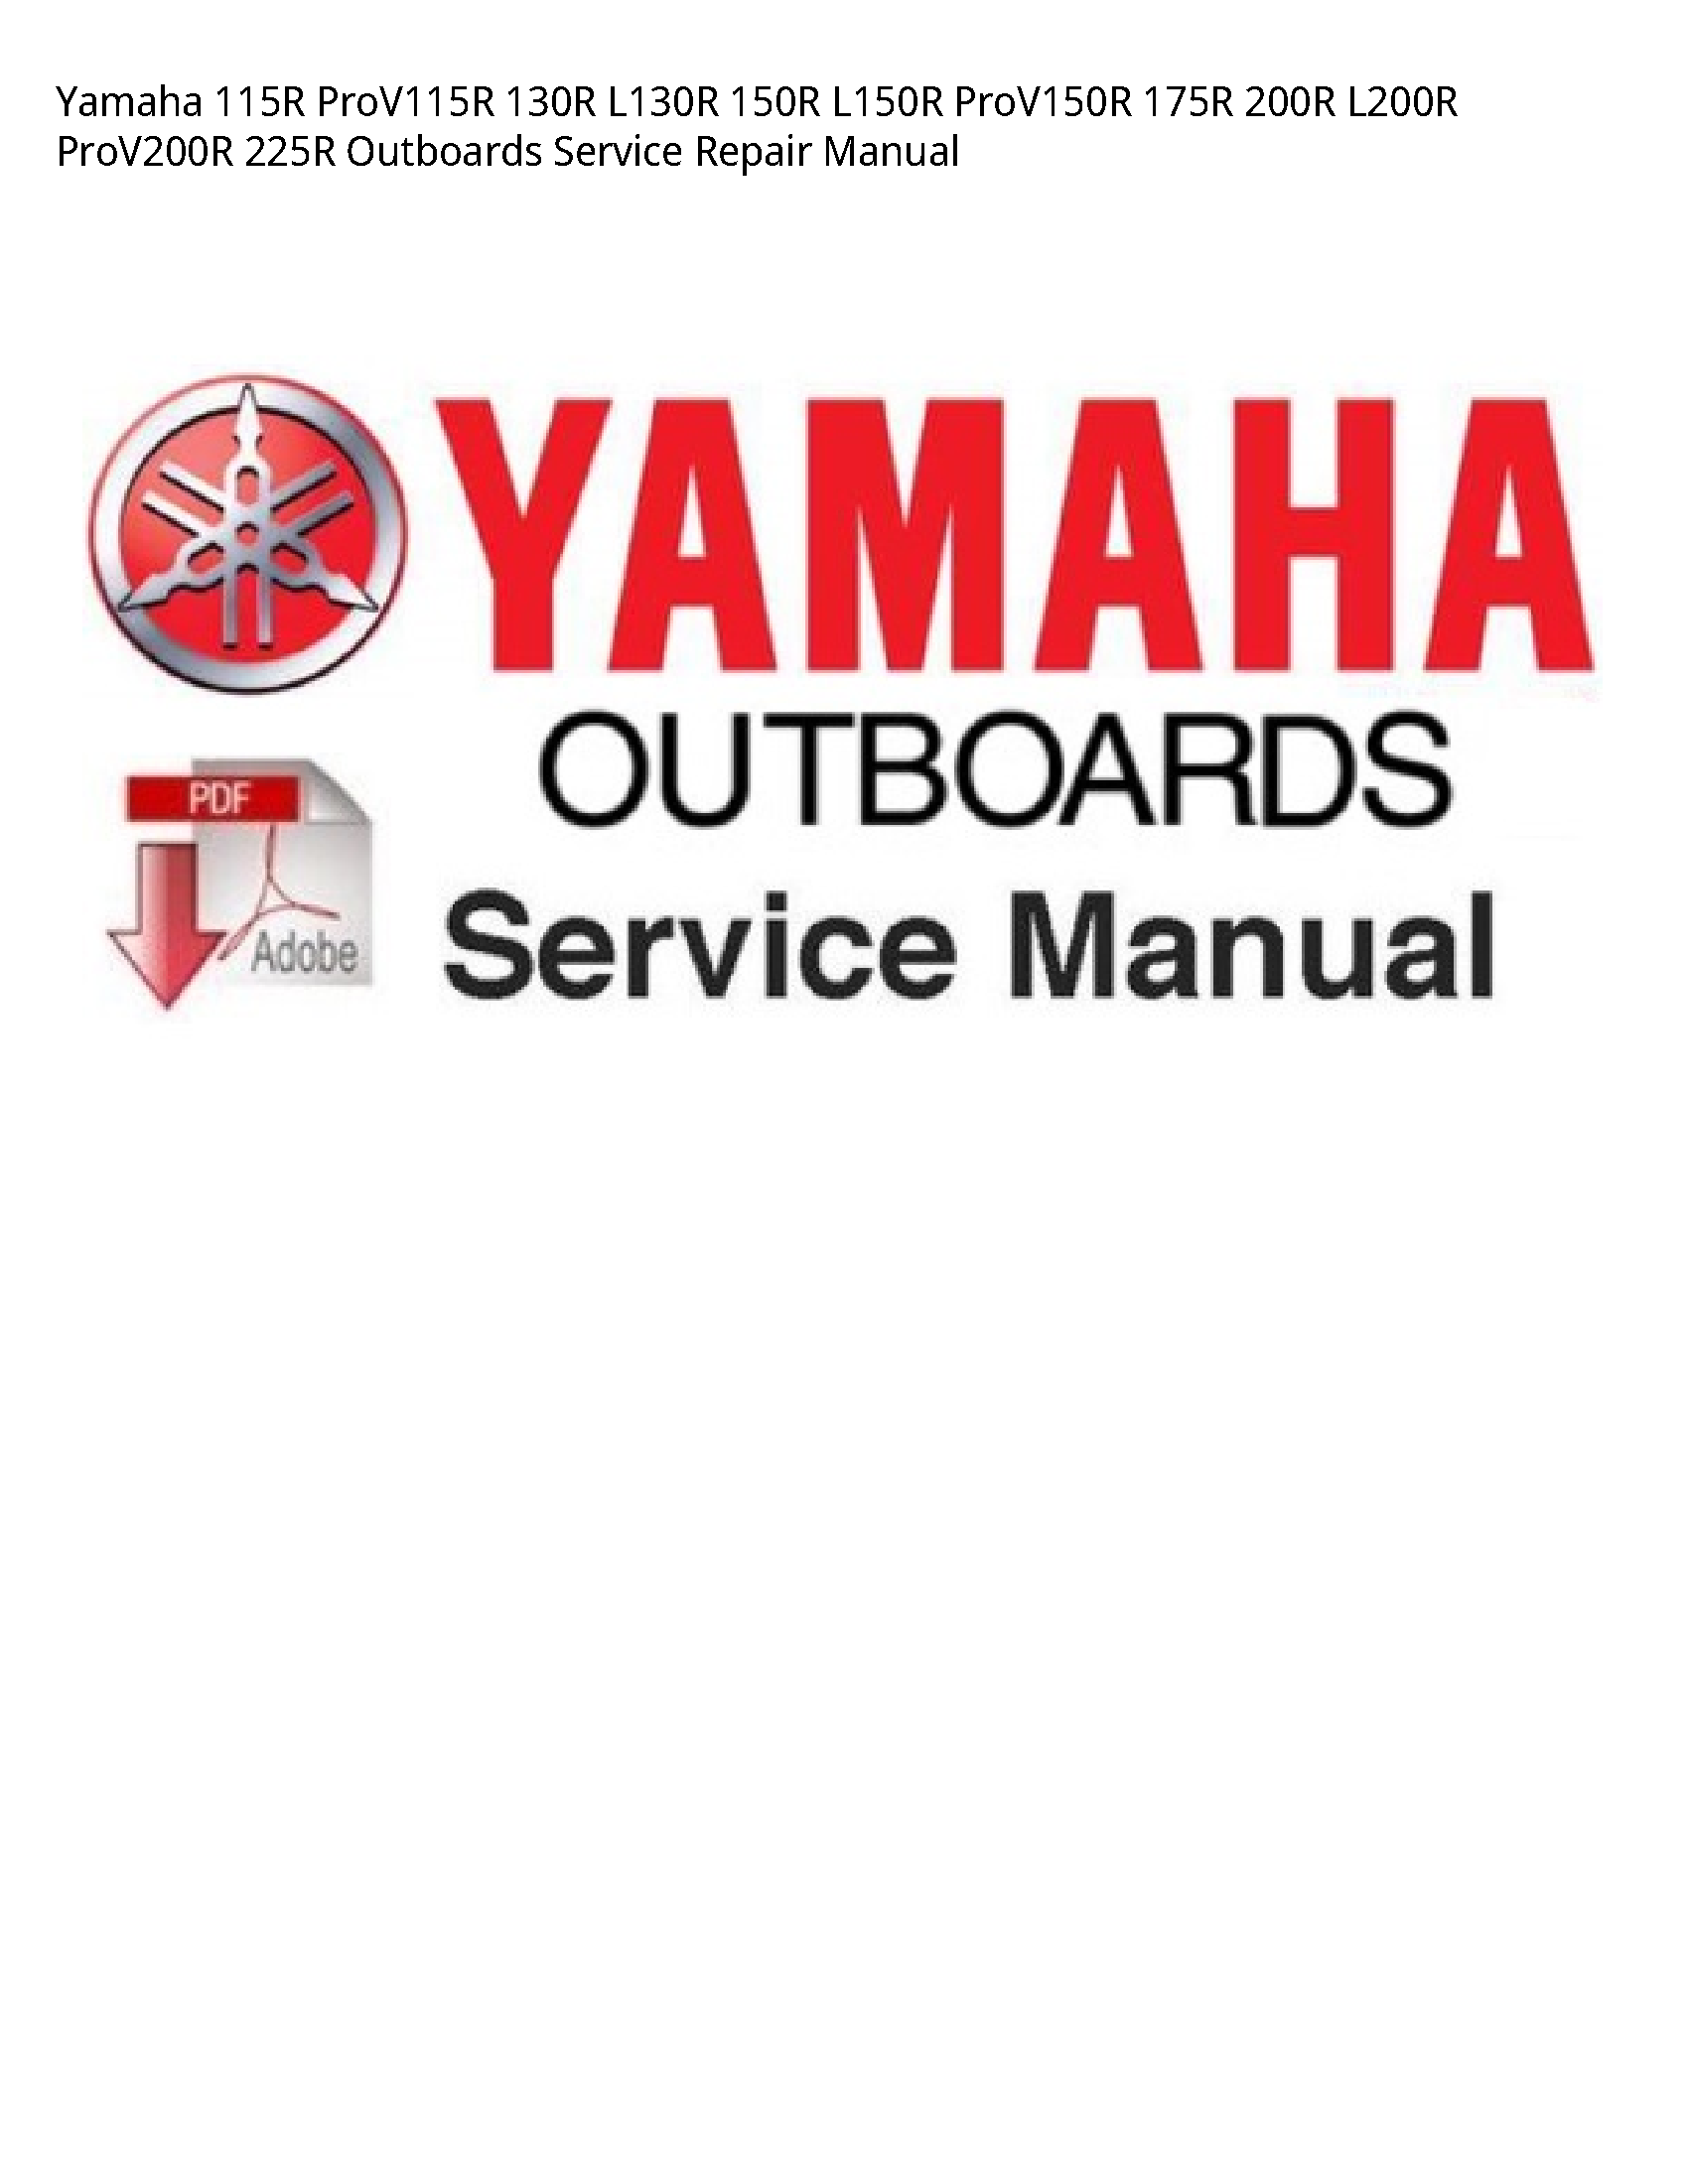 Yamaha 115R Outboards manual